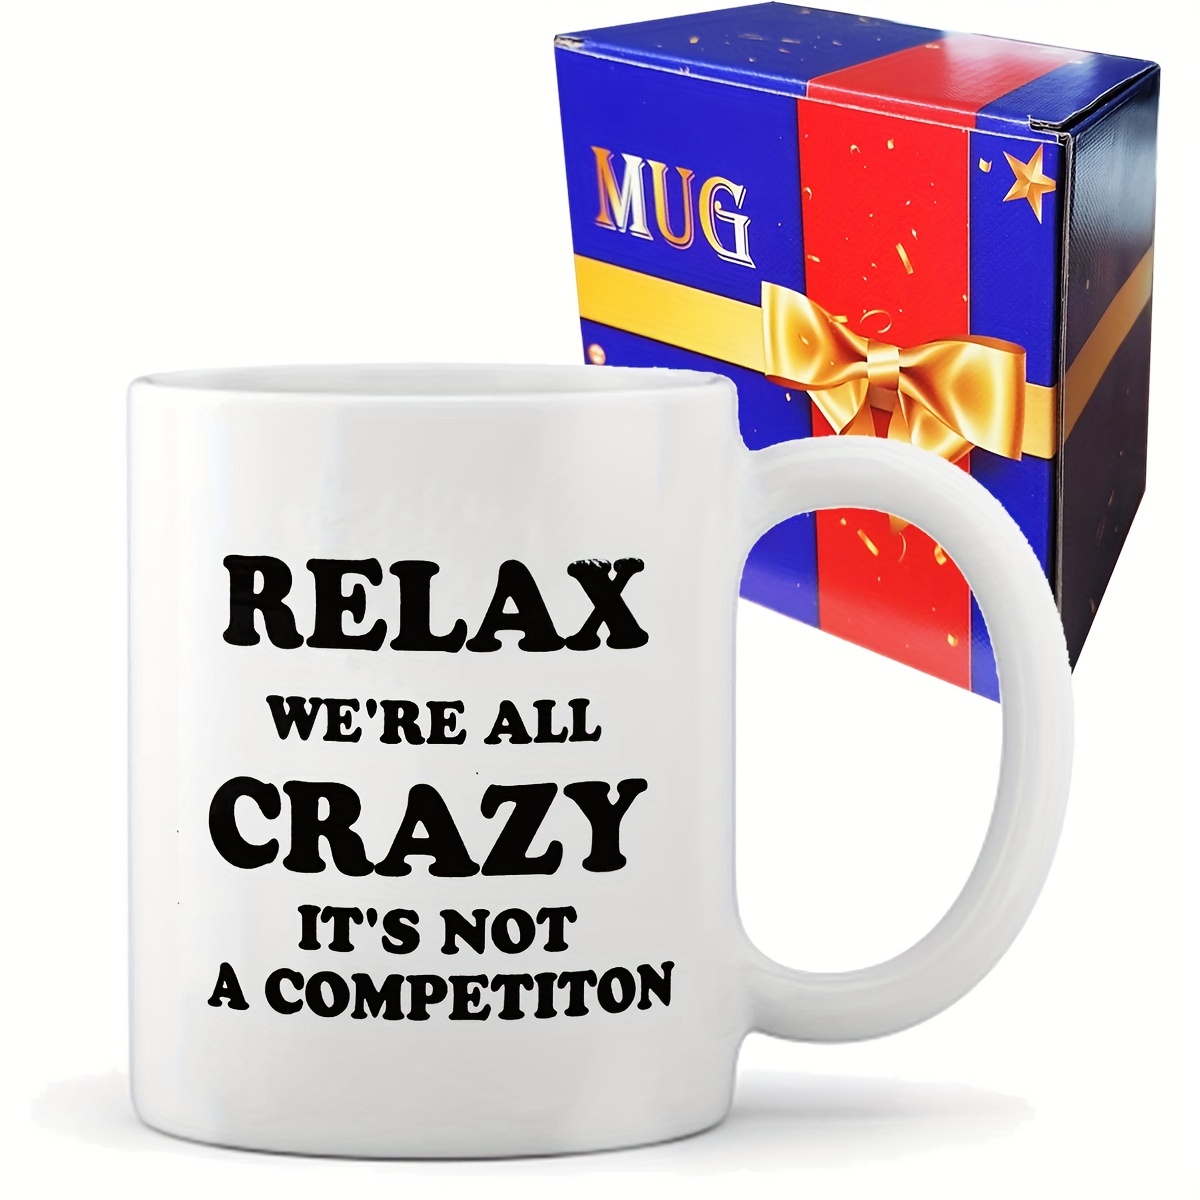 Funny Coffee Mug, Birthday Gift for Work Coffee Cup, Coworker Gag